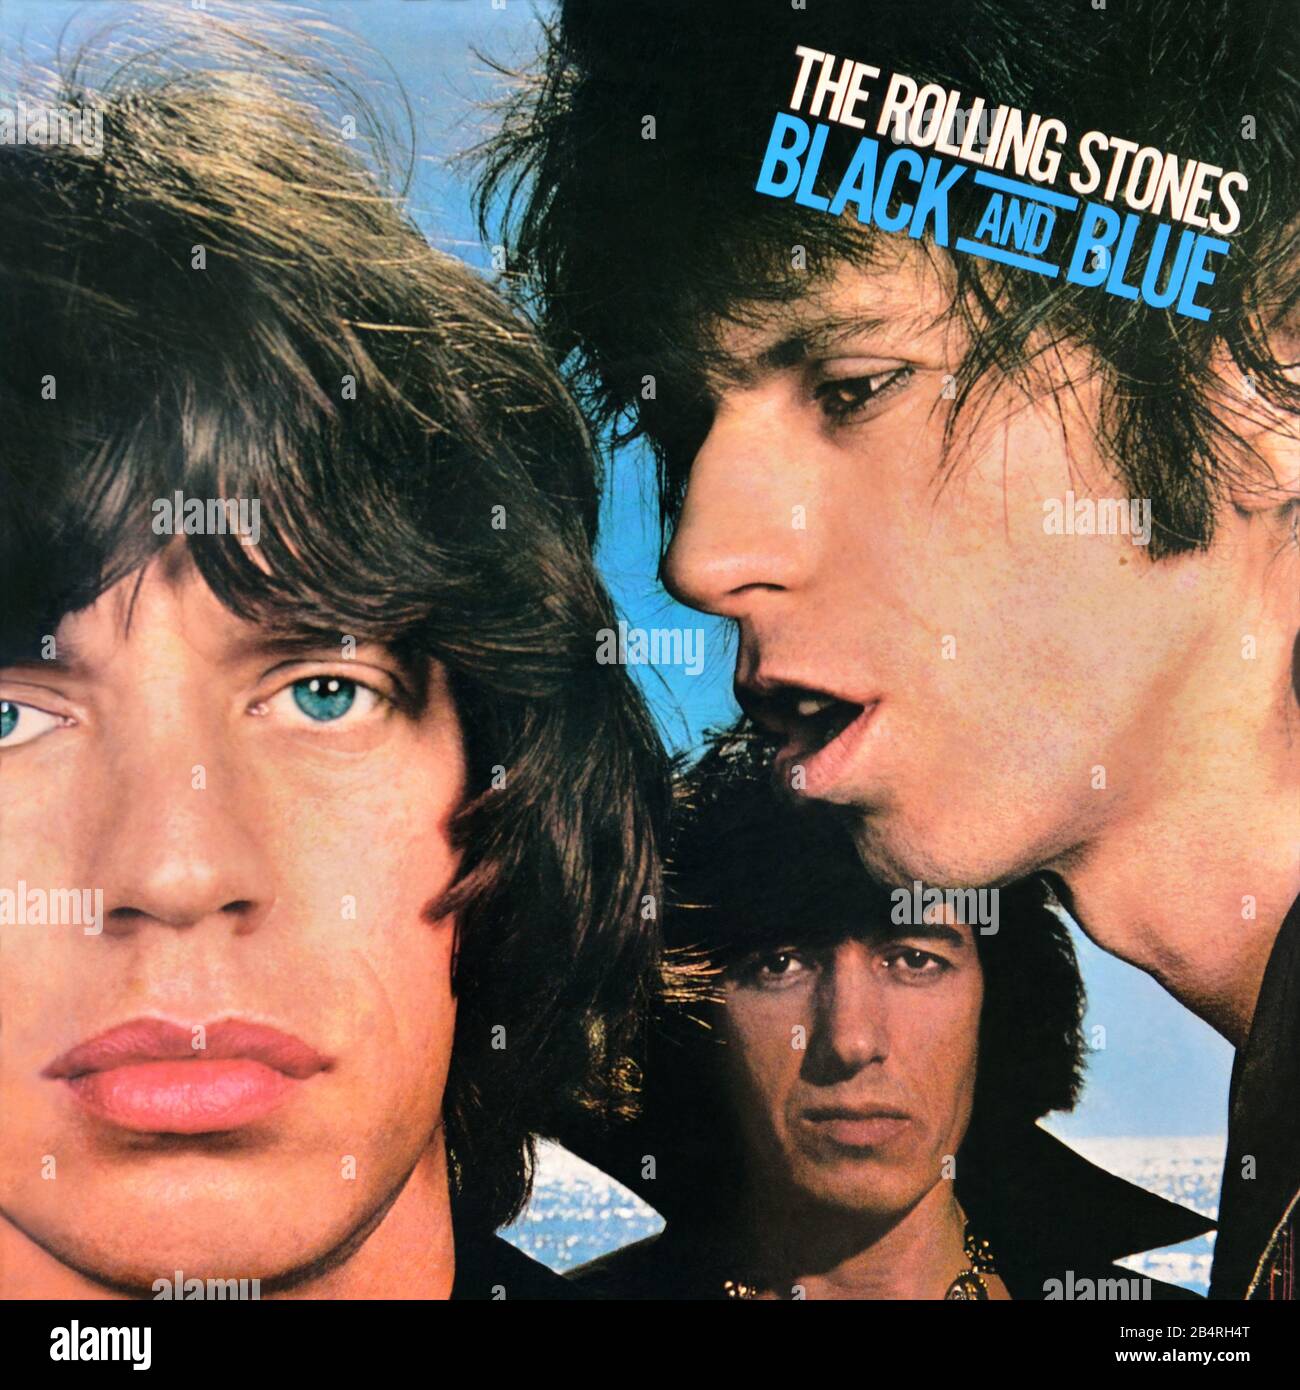 The Rolling Stones - original vinyl album cover - Black And Blue - 1976  Stock Photo - Alamy